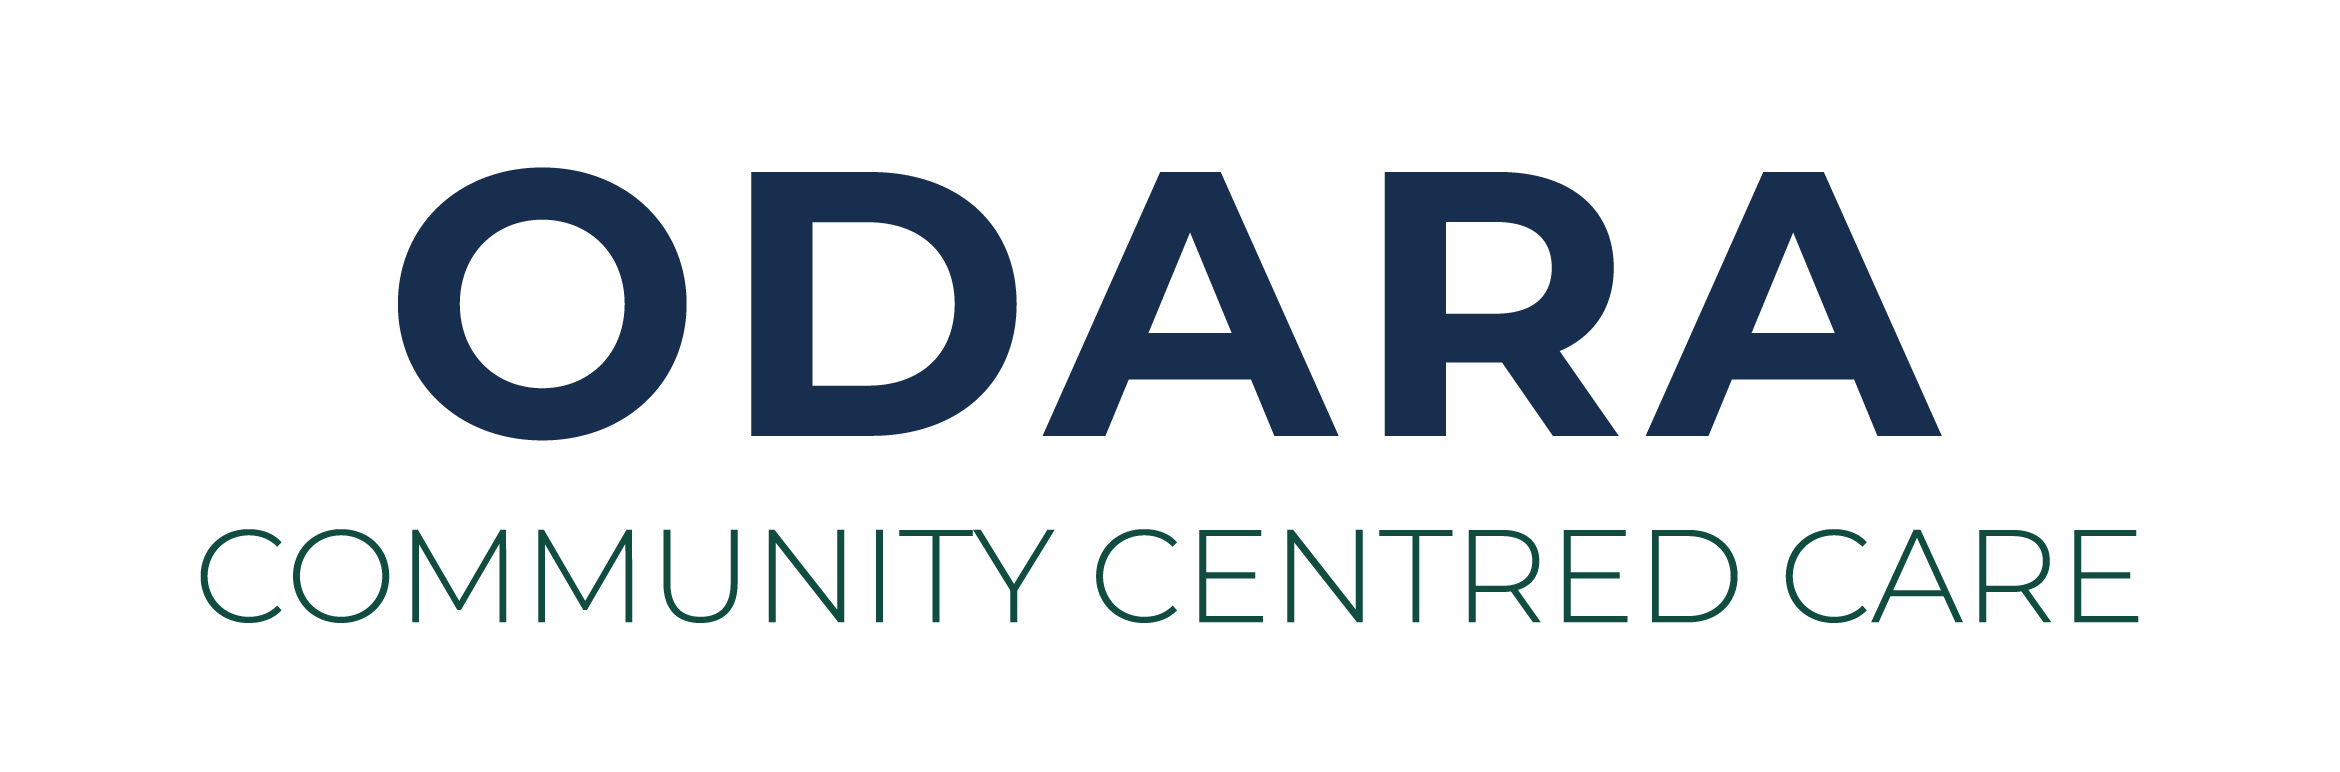 Odara-Care-slogan